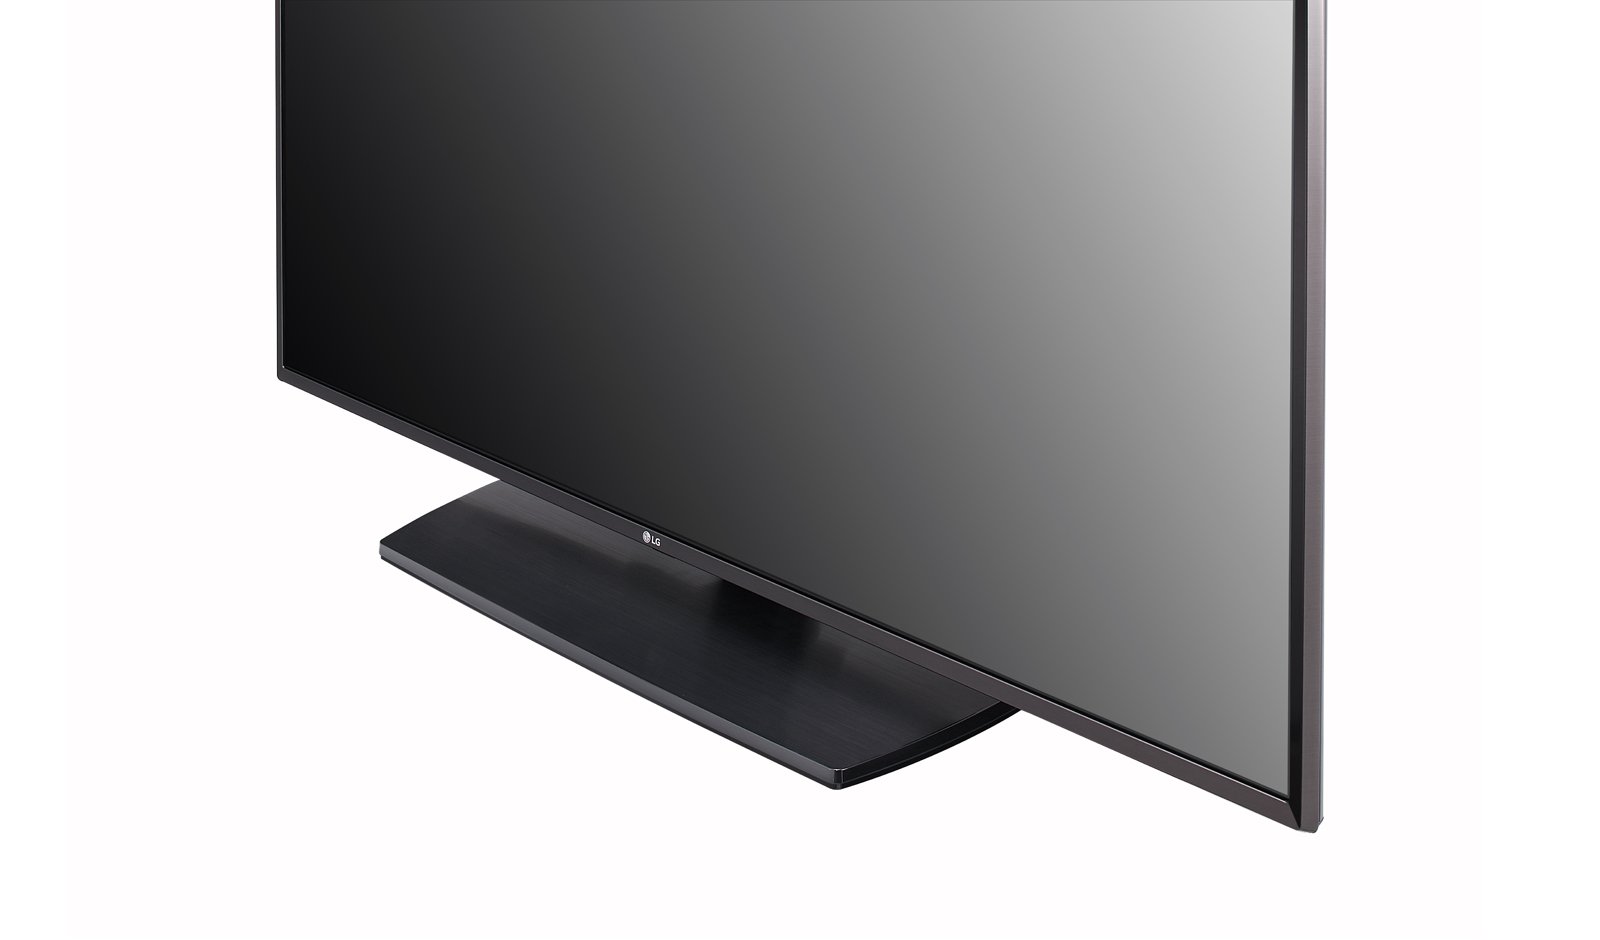 Телевизор 49 см. Телевизор LG 49lv761h (черный). Lg43lv541h. LG lv280. Samsung qe50q80tau.